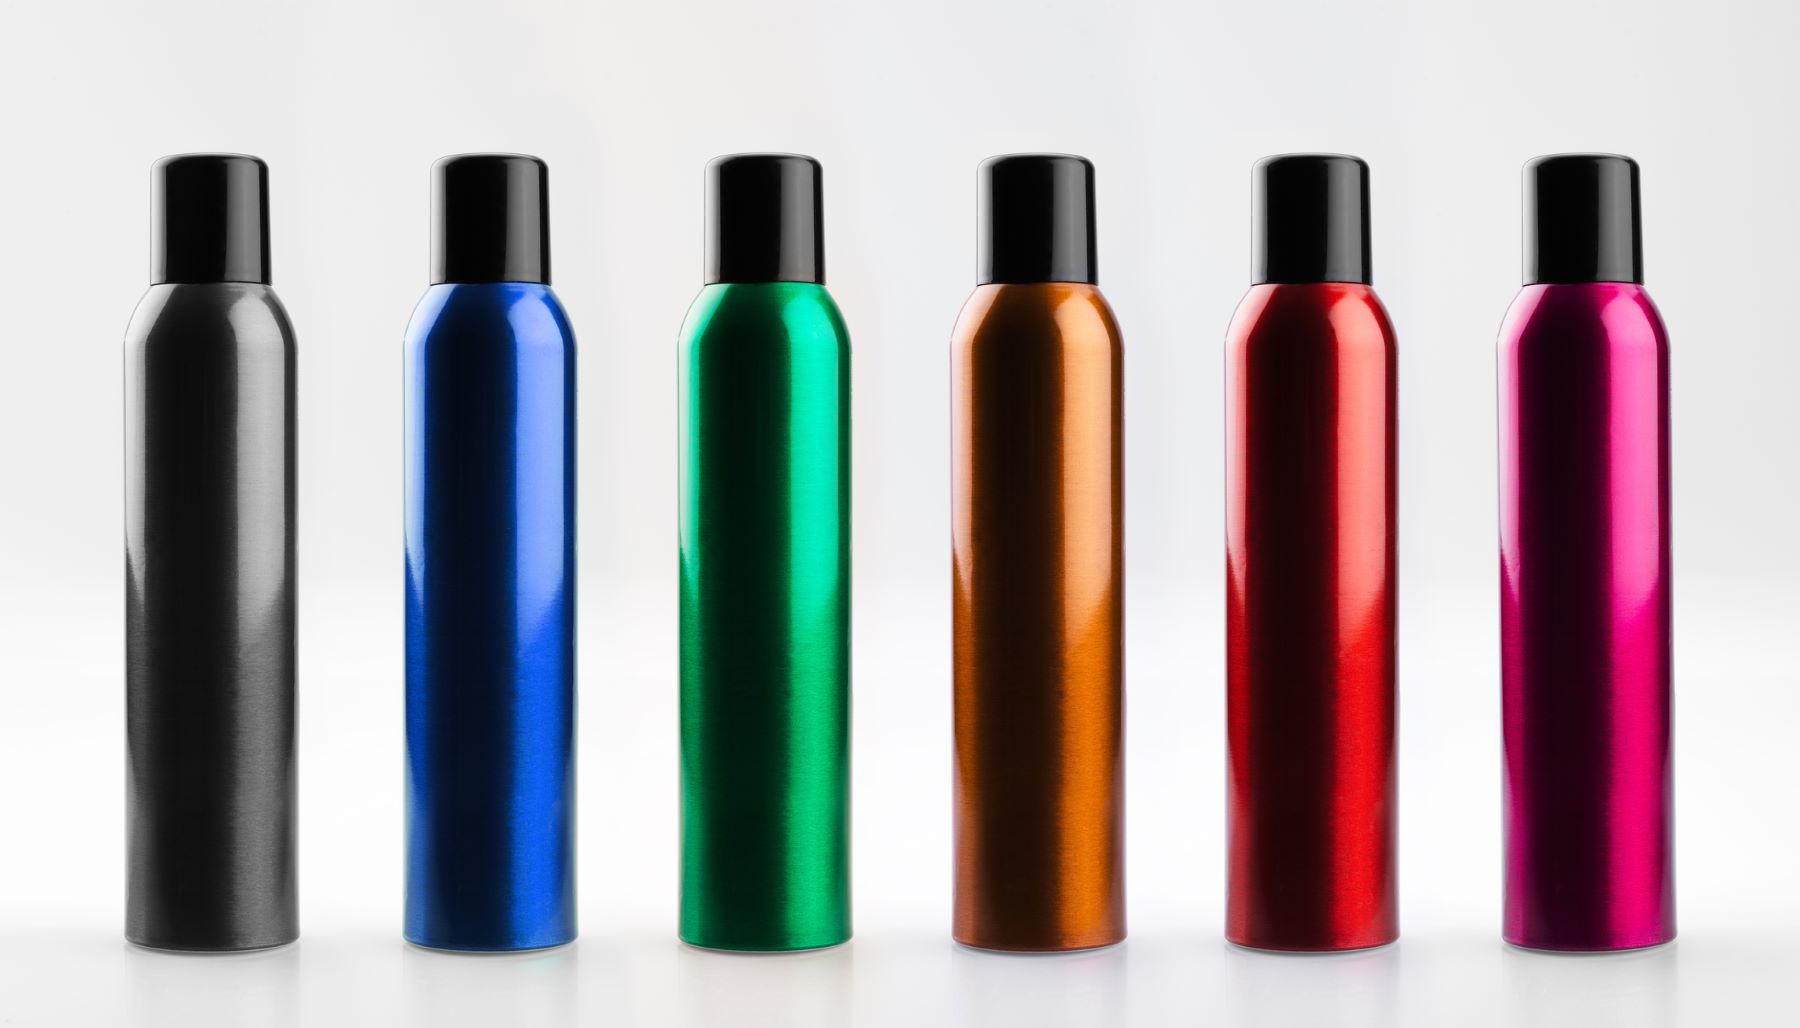 Types of hairspray